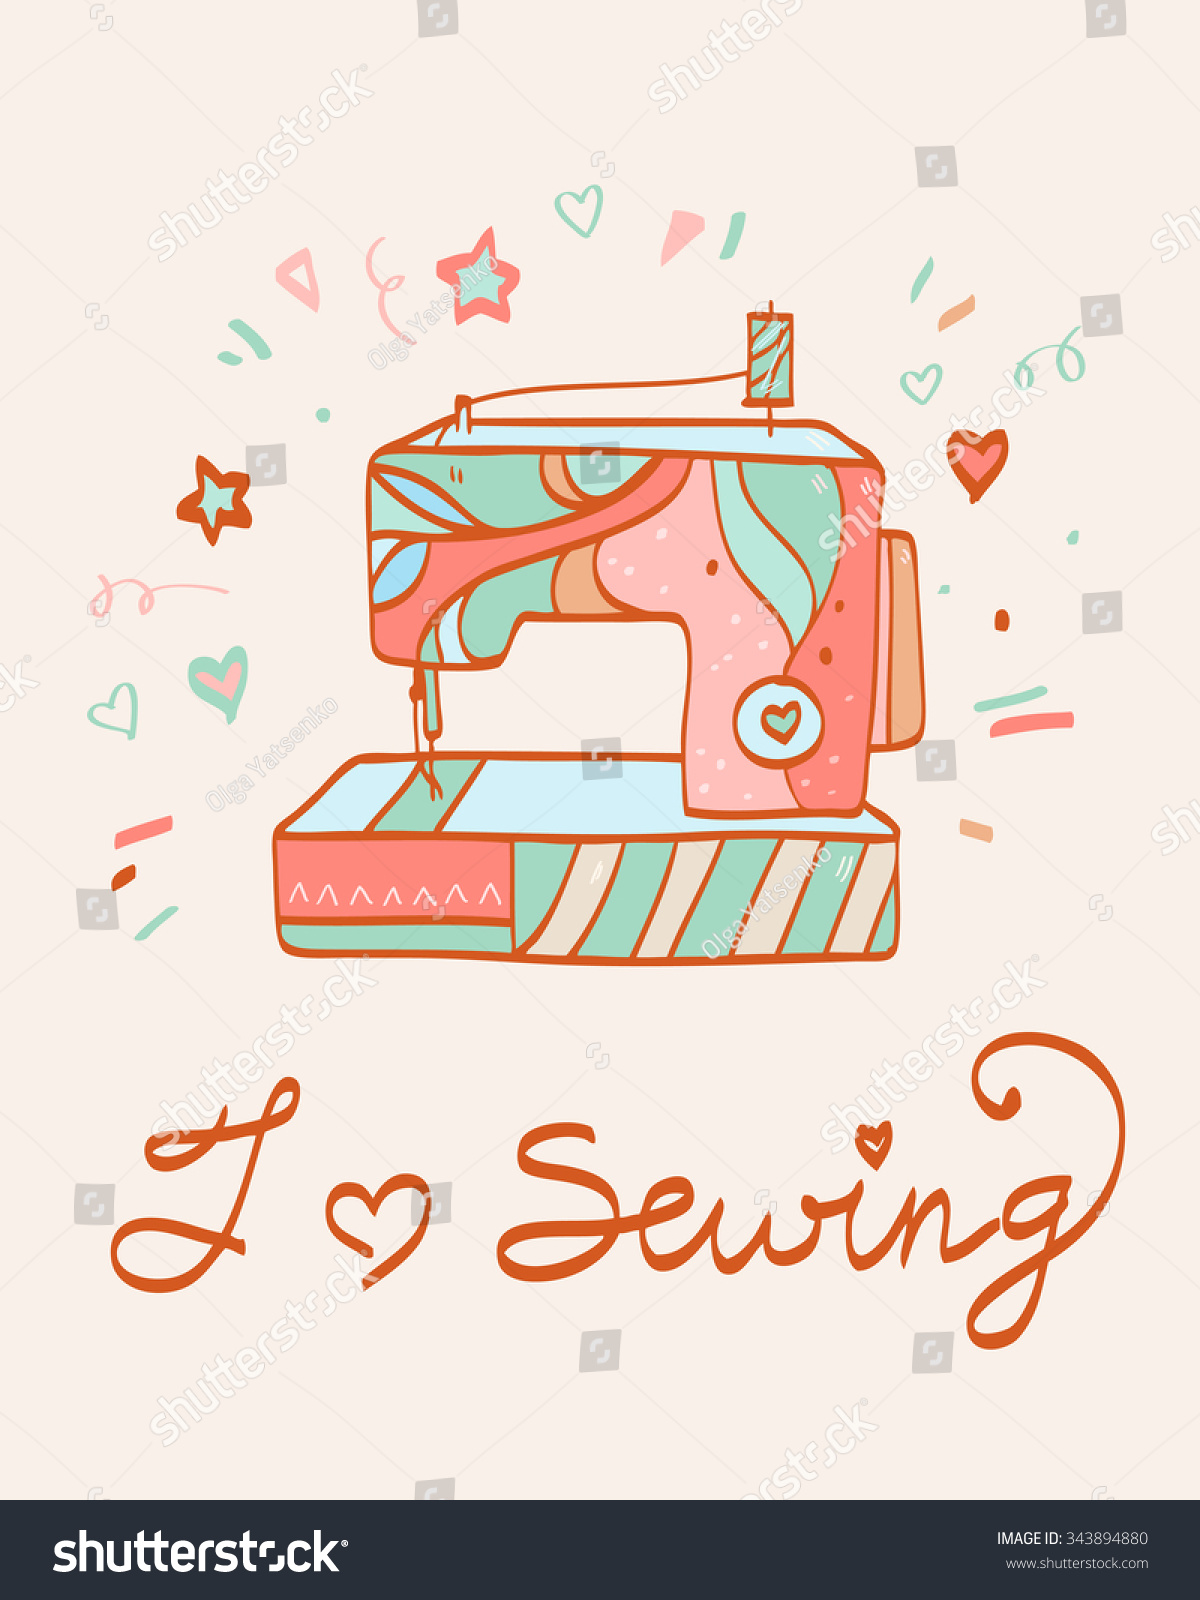 Cartoon Sewing Machine Text Love Sewing: เวกเตอร์สต็อก (ปลอดค่า